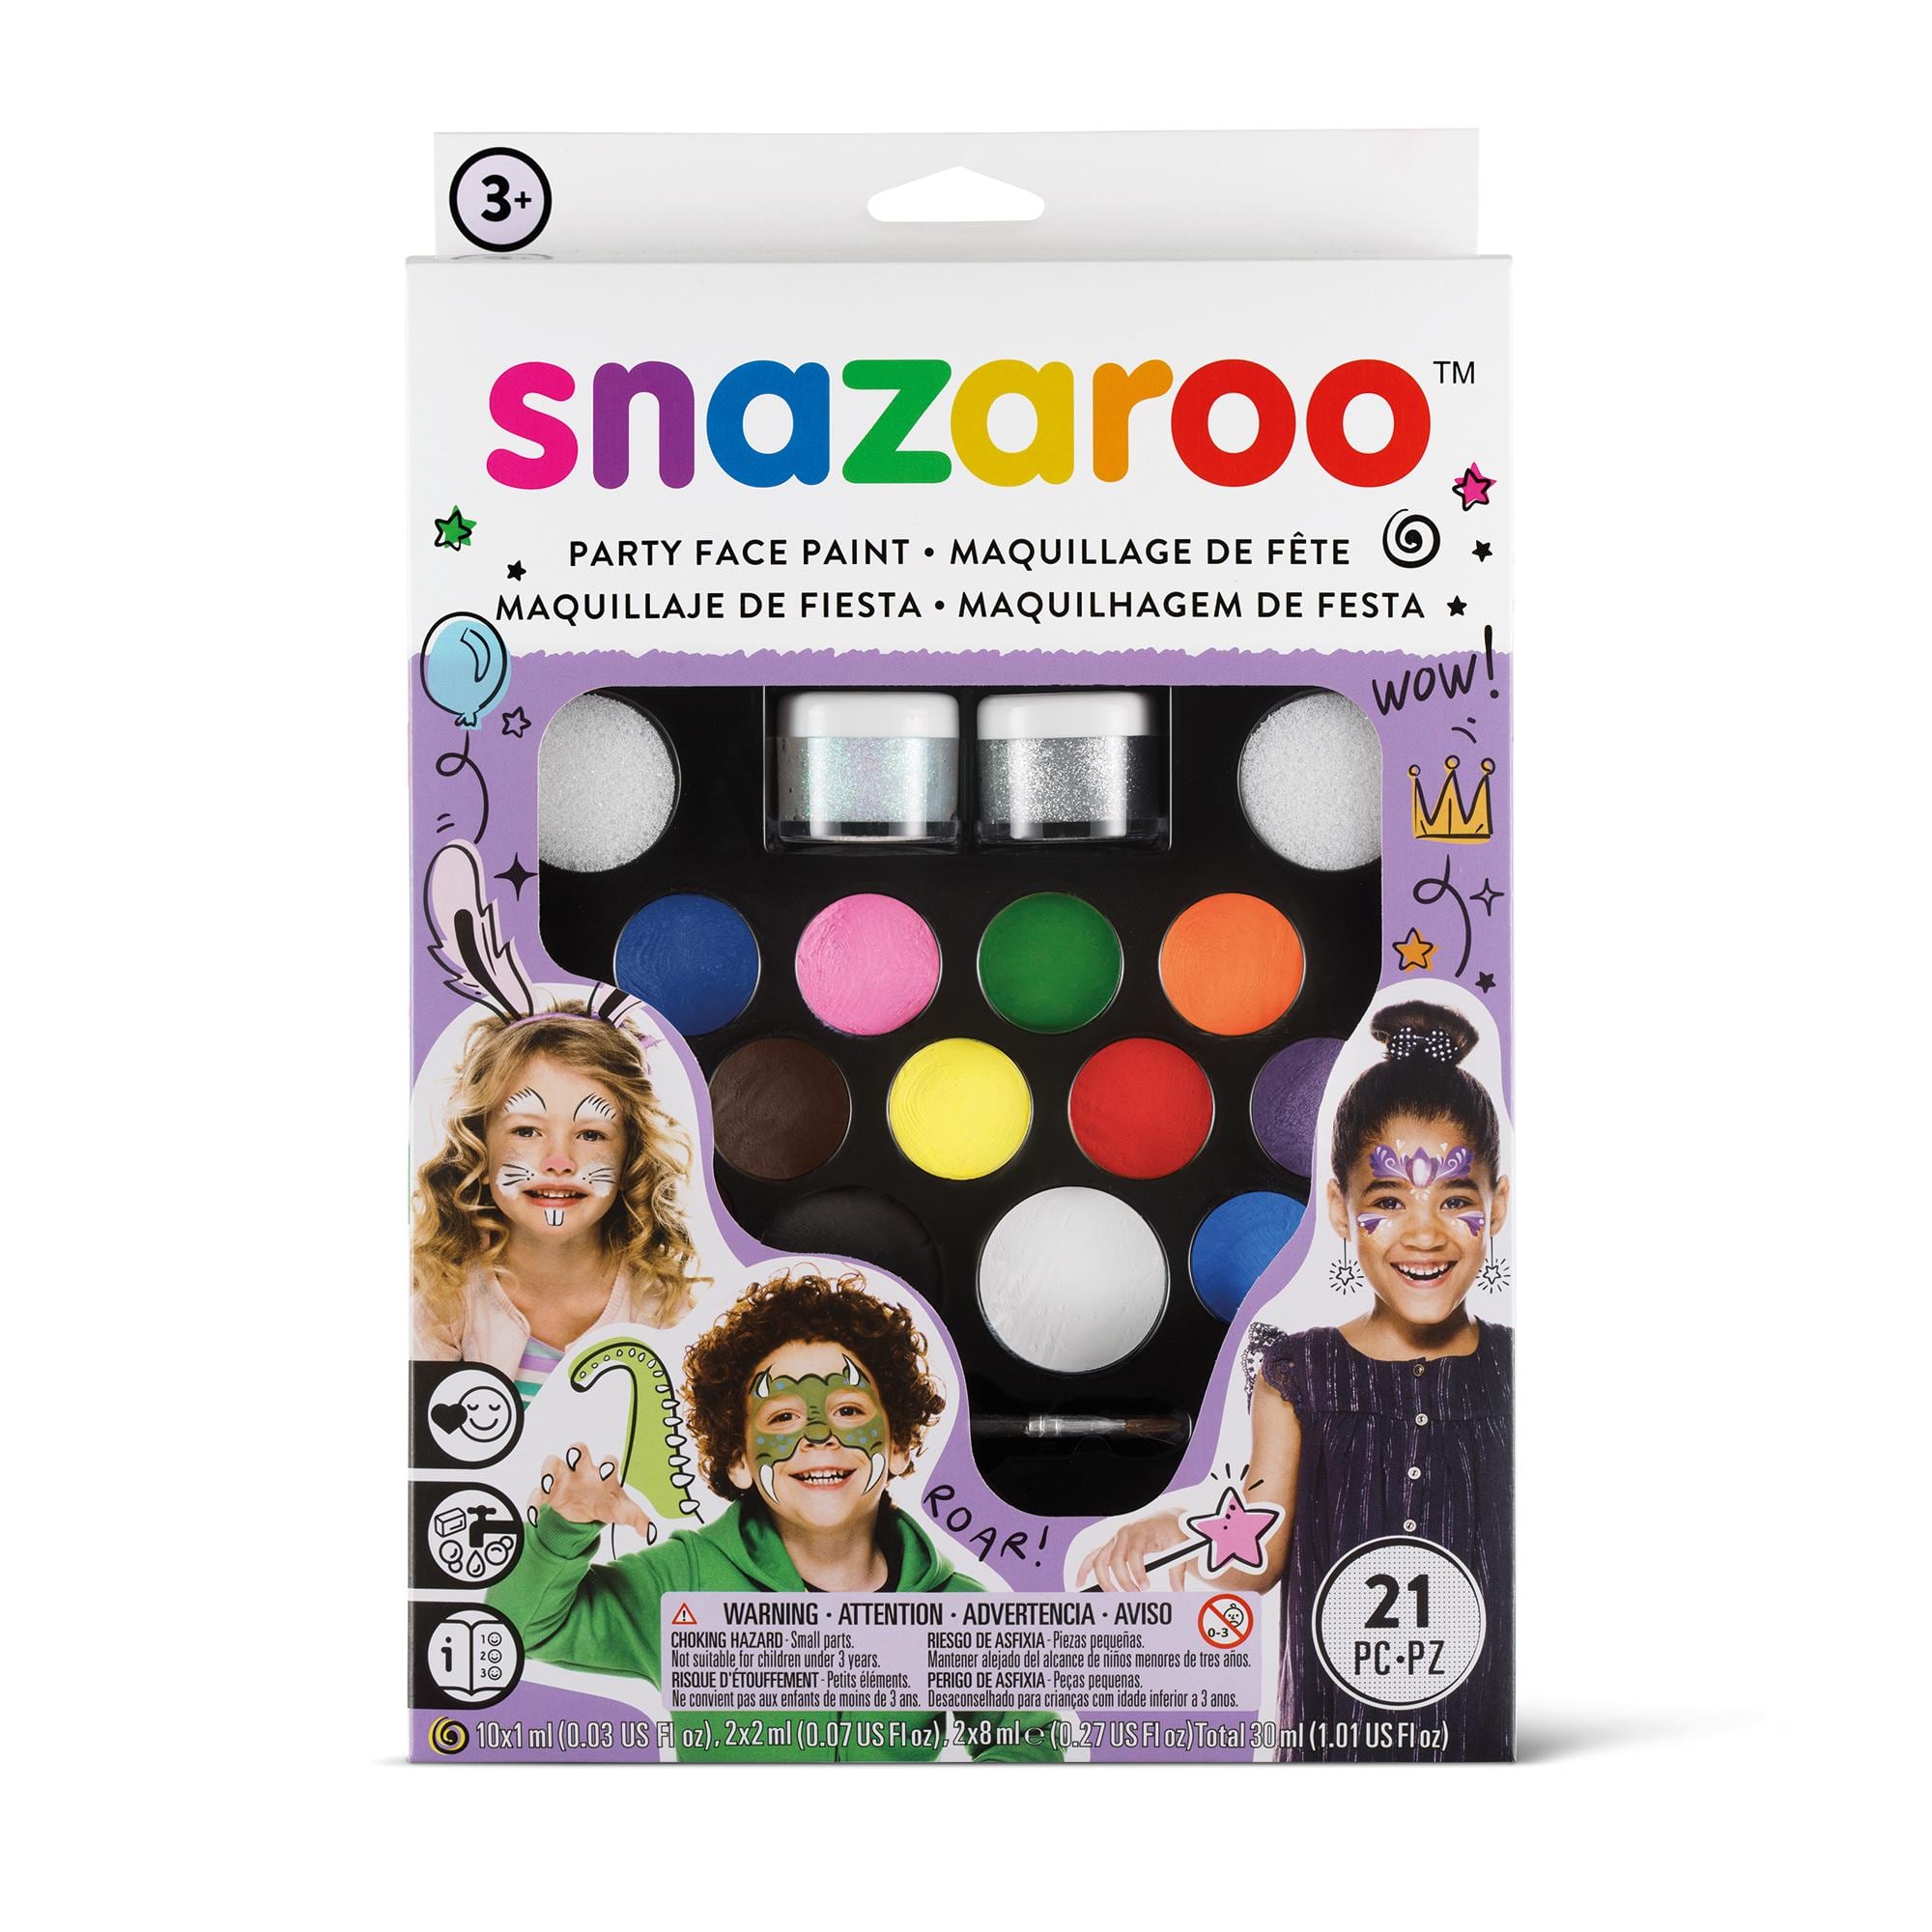 Buy specool Face Paint Kit, 21 Colour Face Painting Kit for Kids